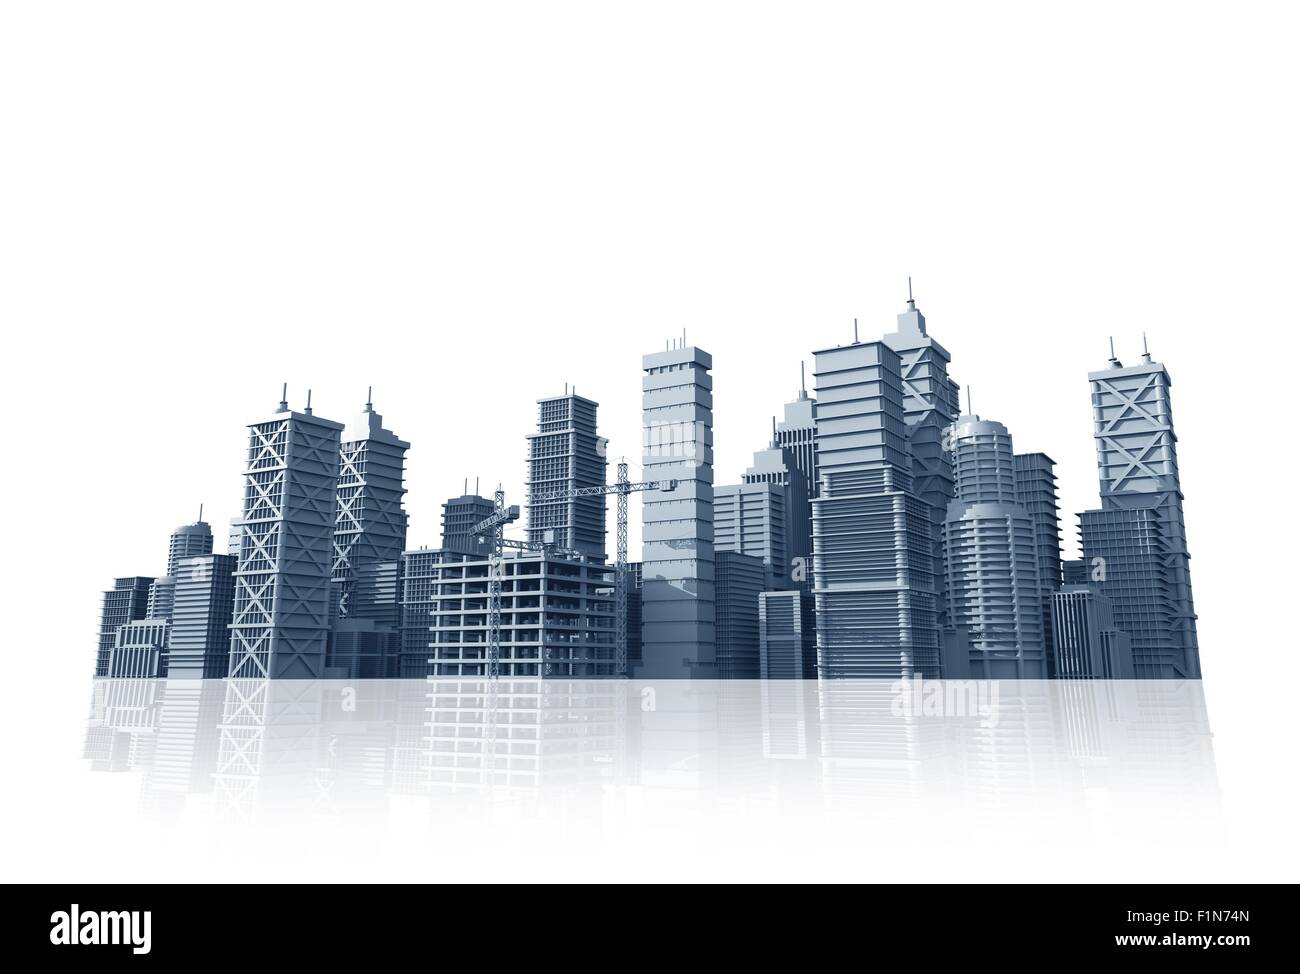 City Skyline Isolated on White. 3D City Skyline Illustration. Stock Photo